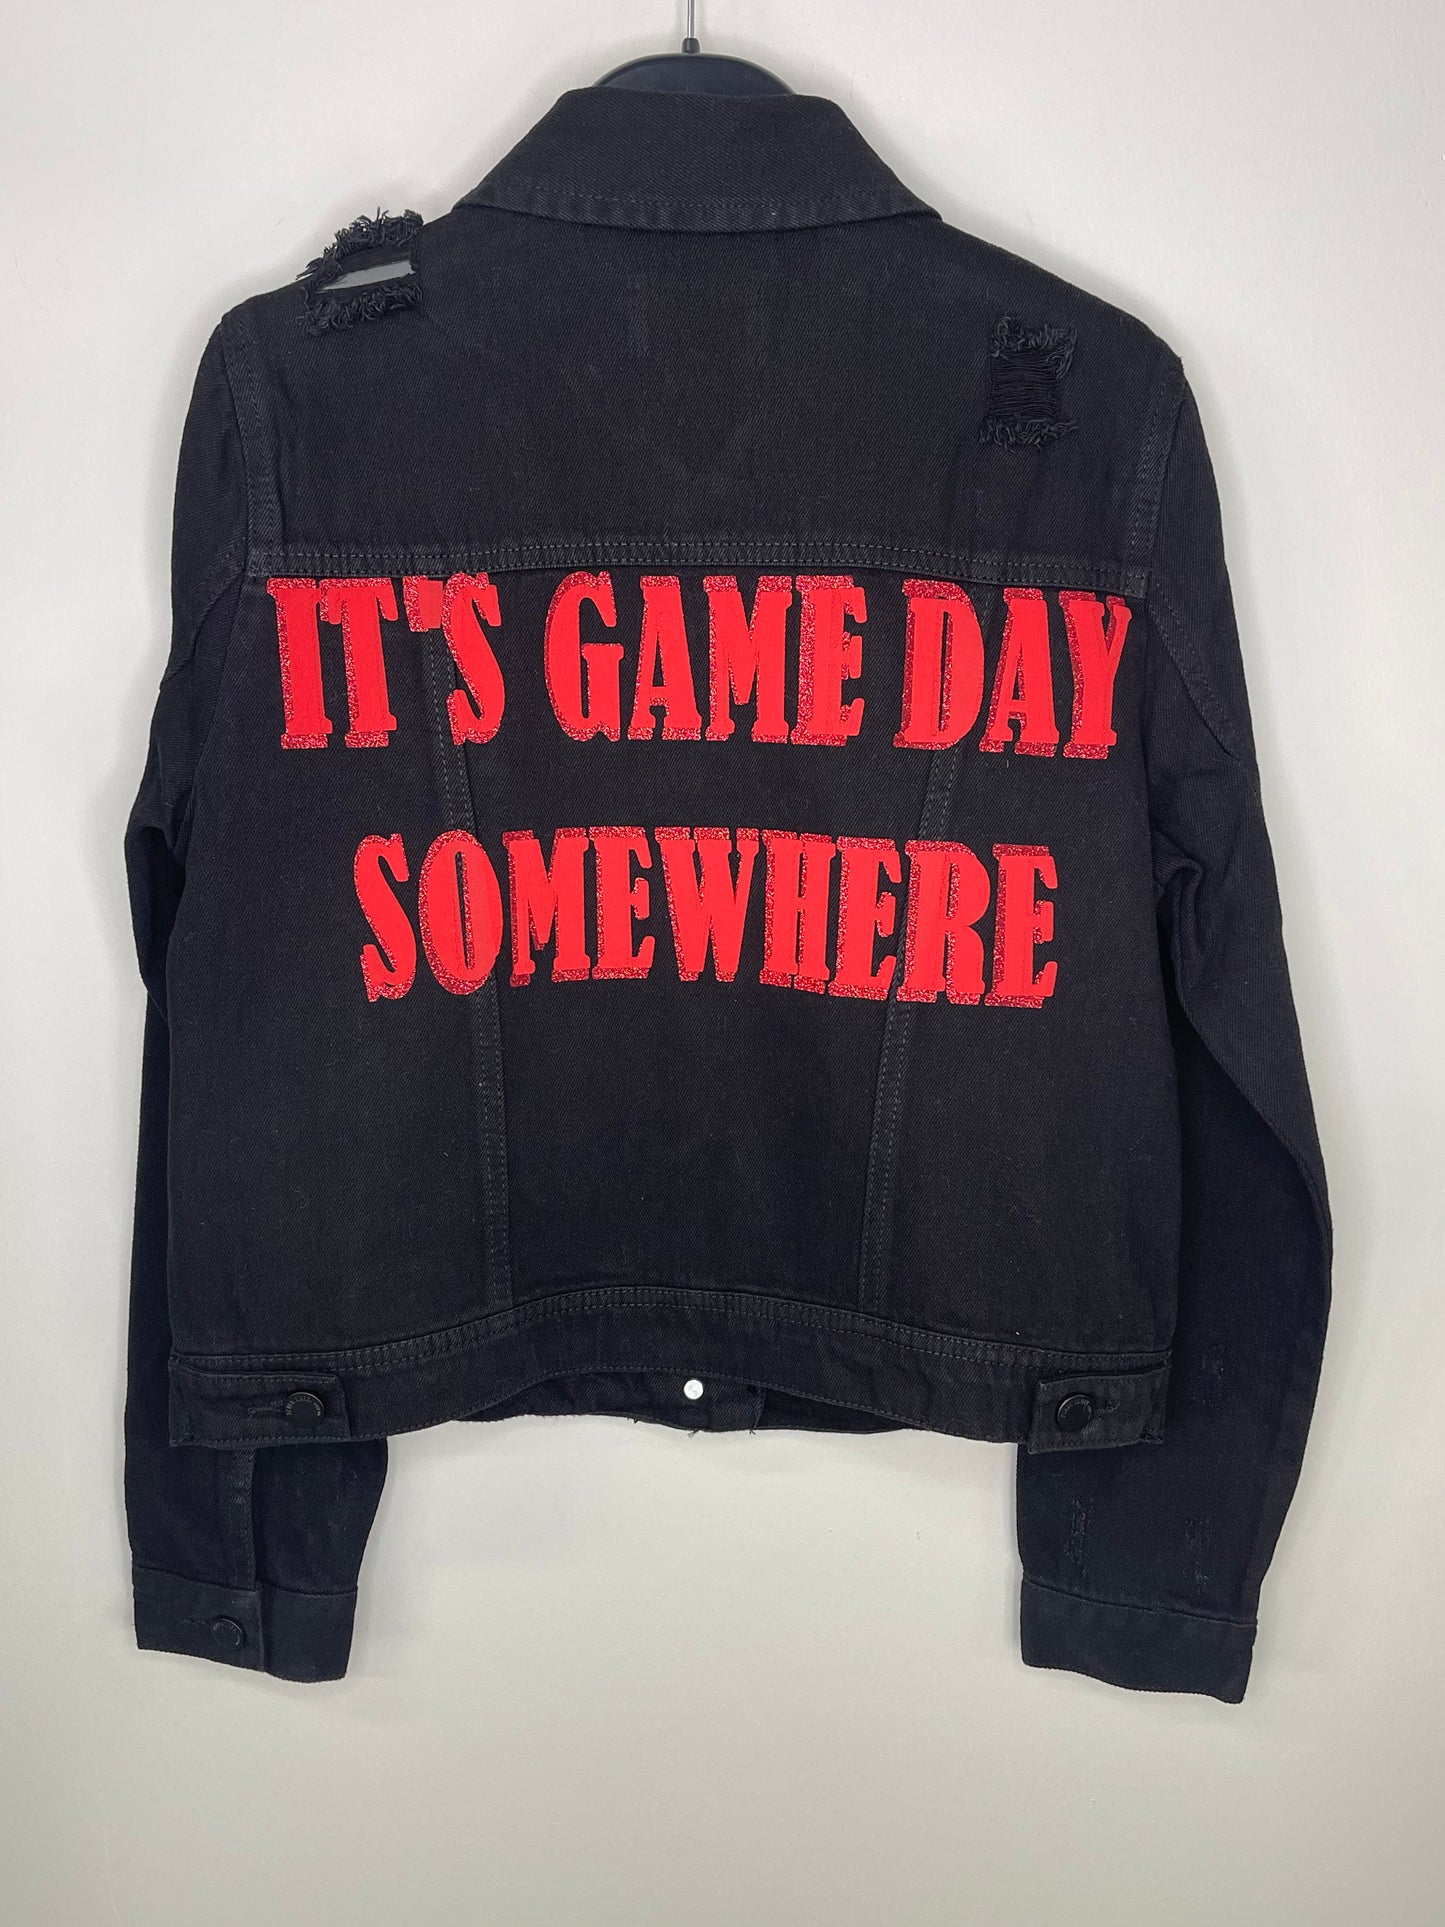 Jacket, Denim Black, It's Game Day Somewhere